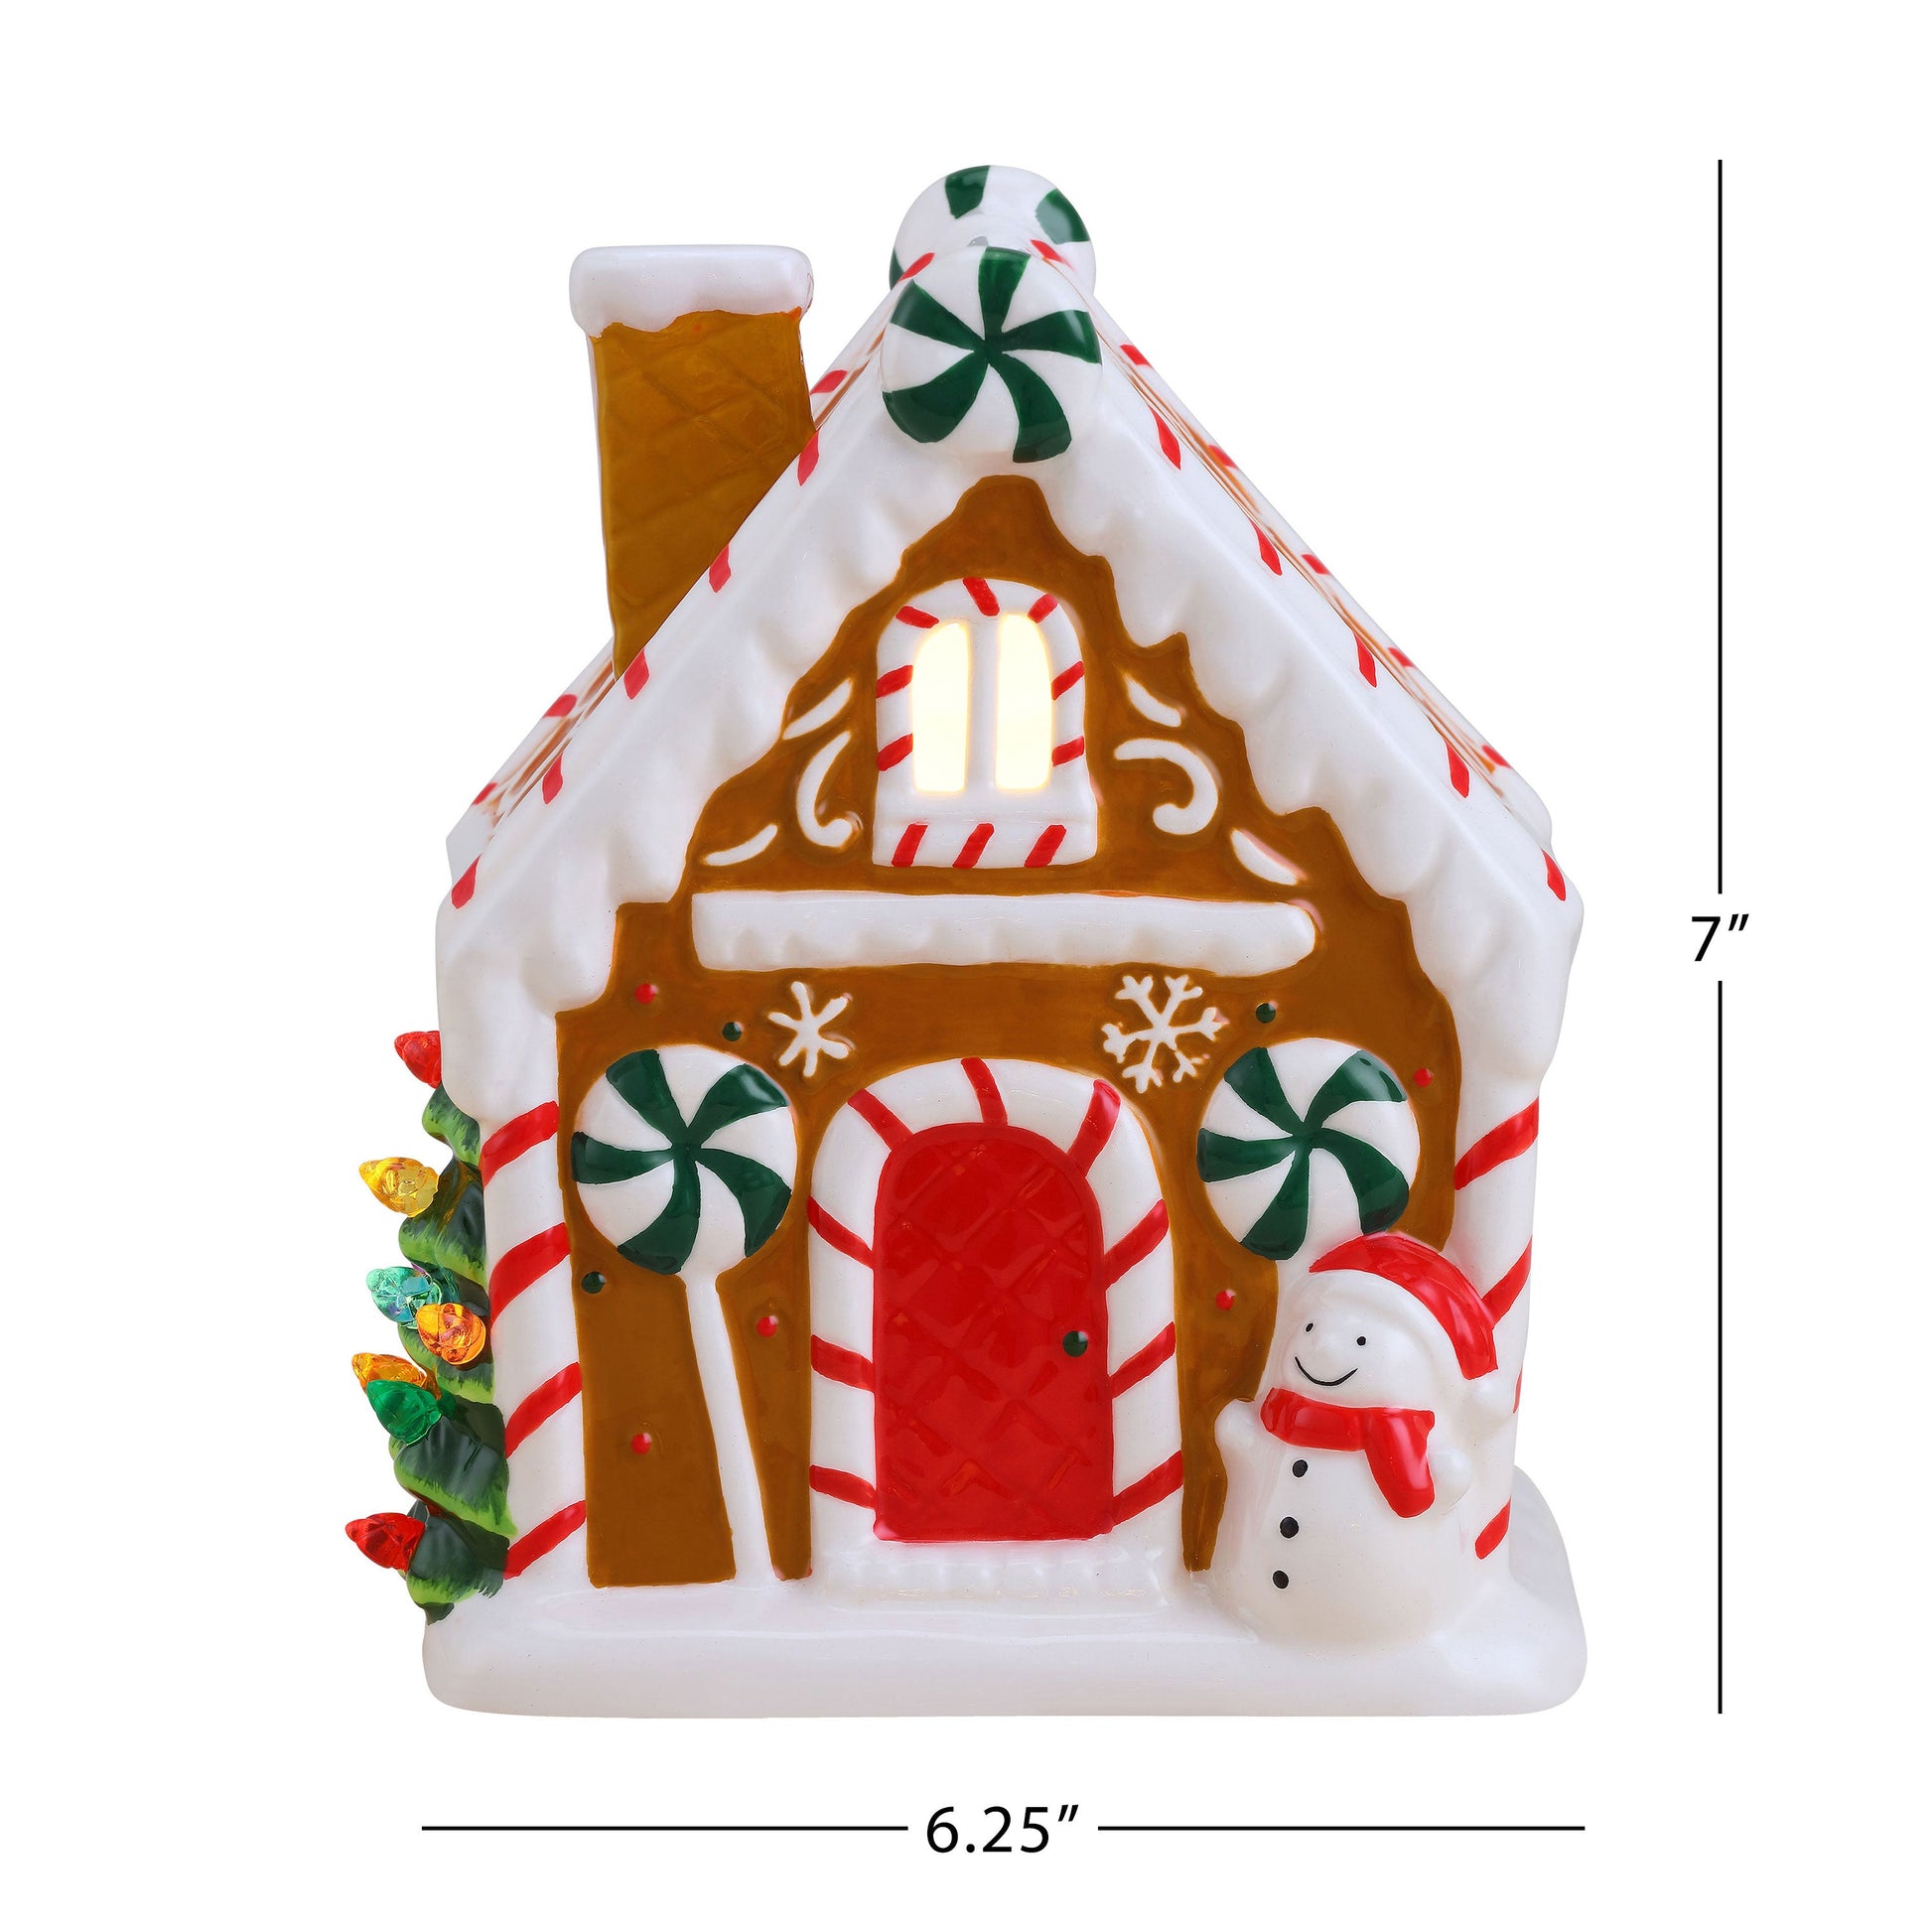 7" Nostalgic Ceramic Lit Gingerbread House - Brown - Mr. Christmas